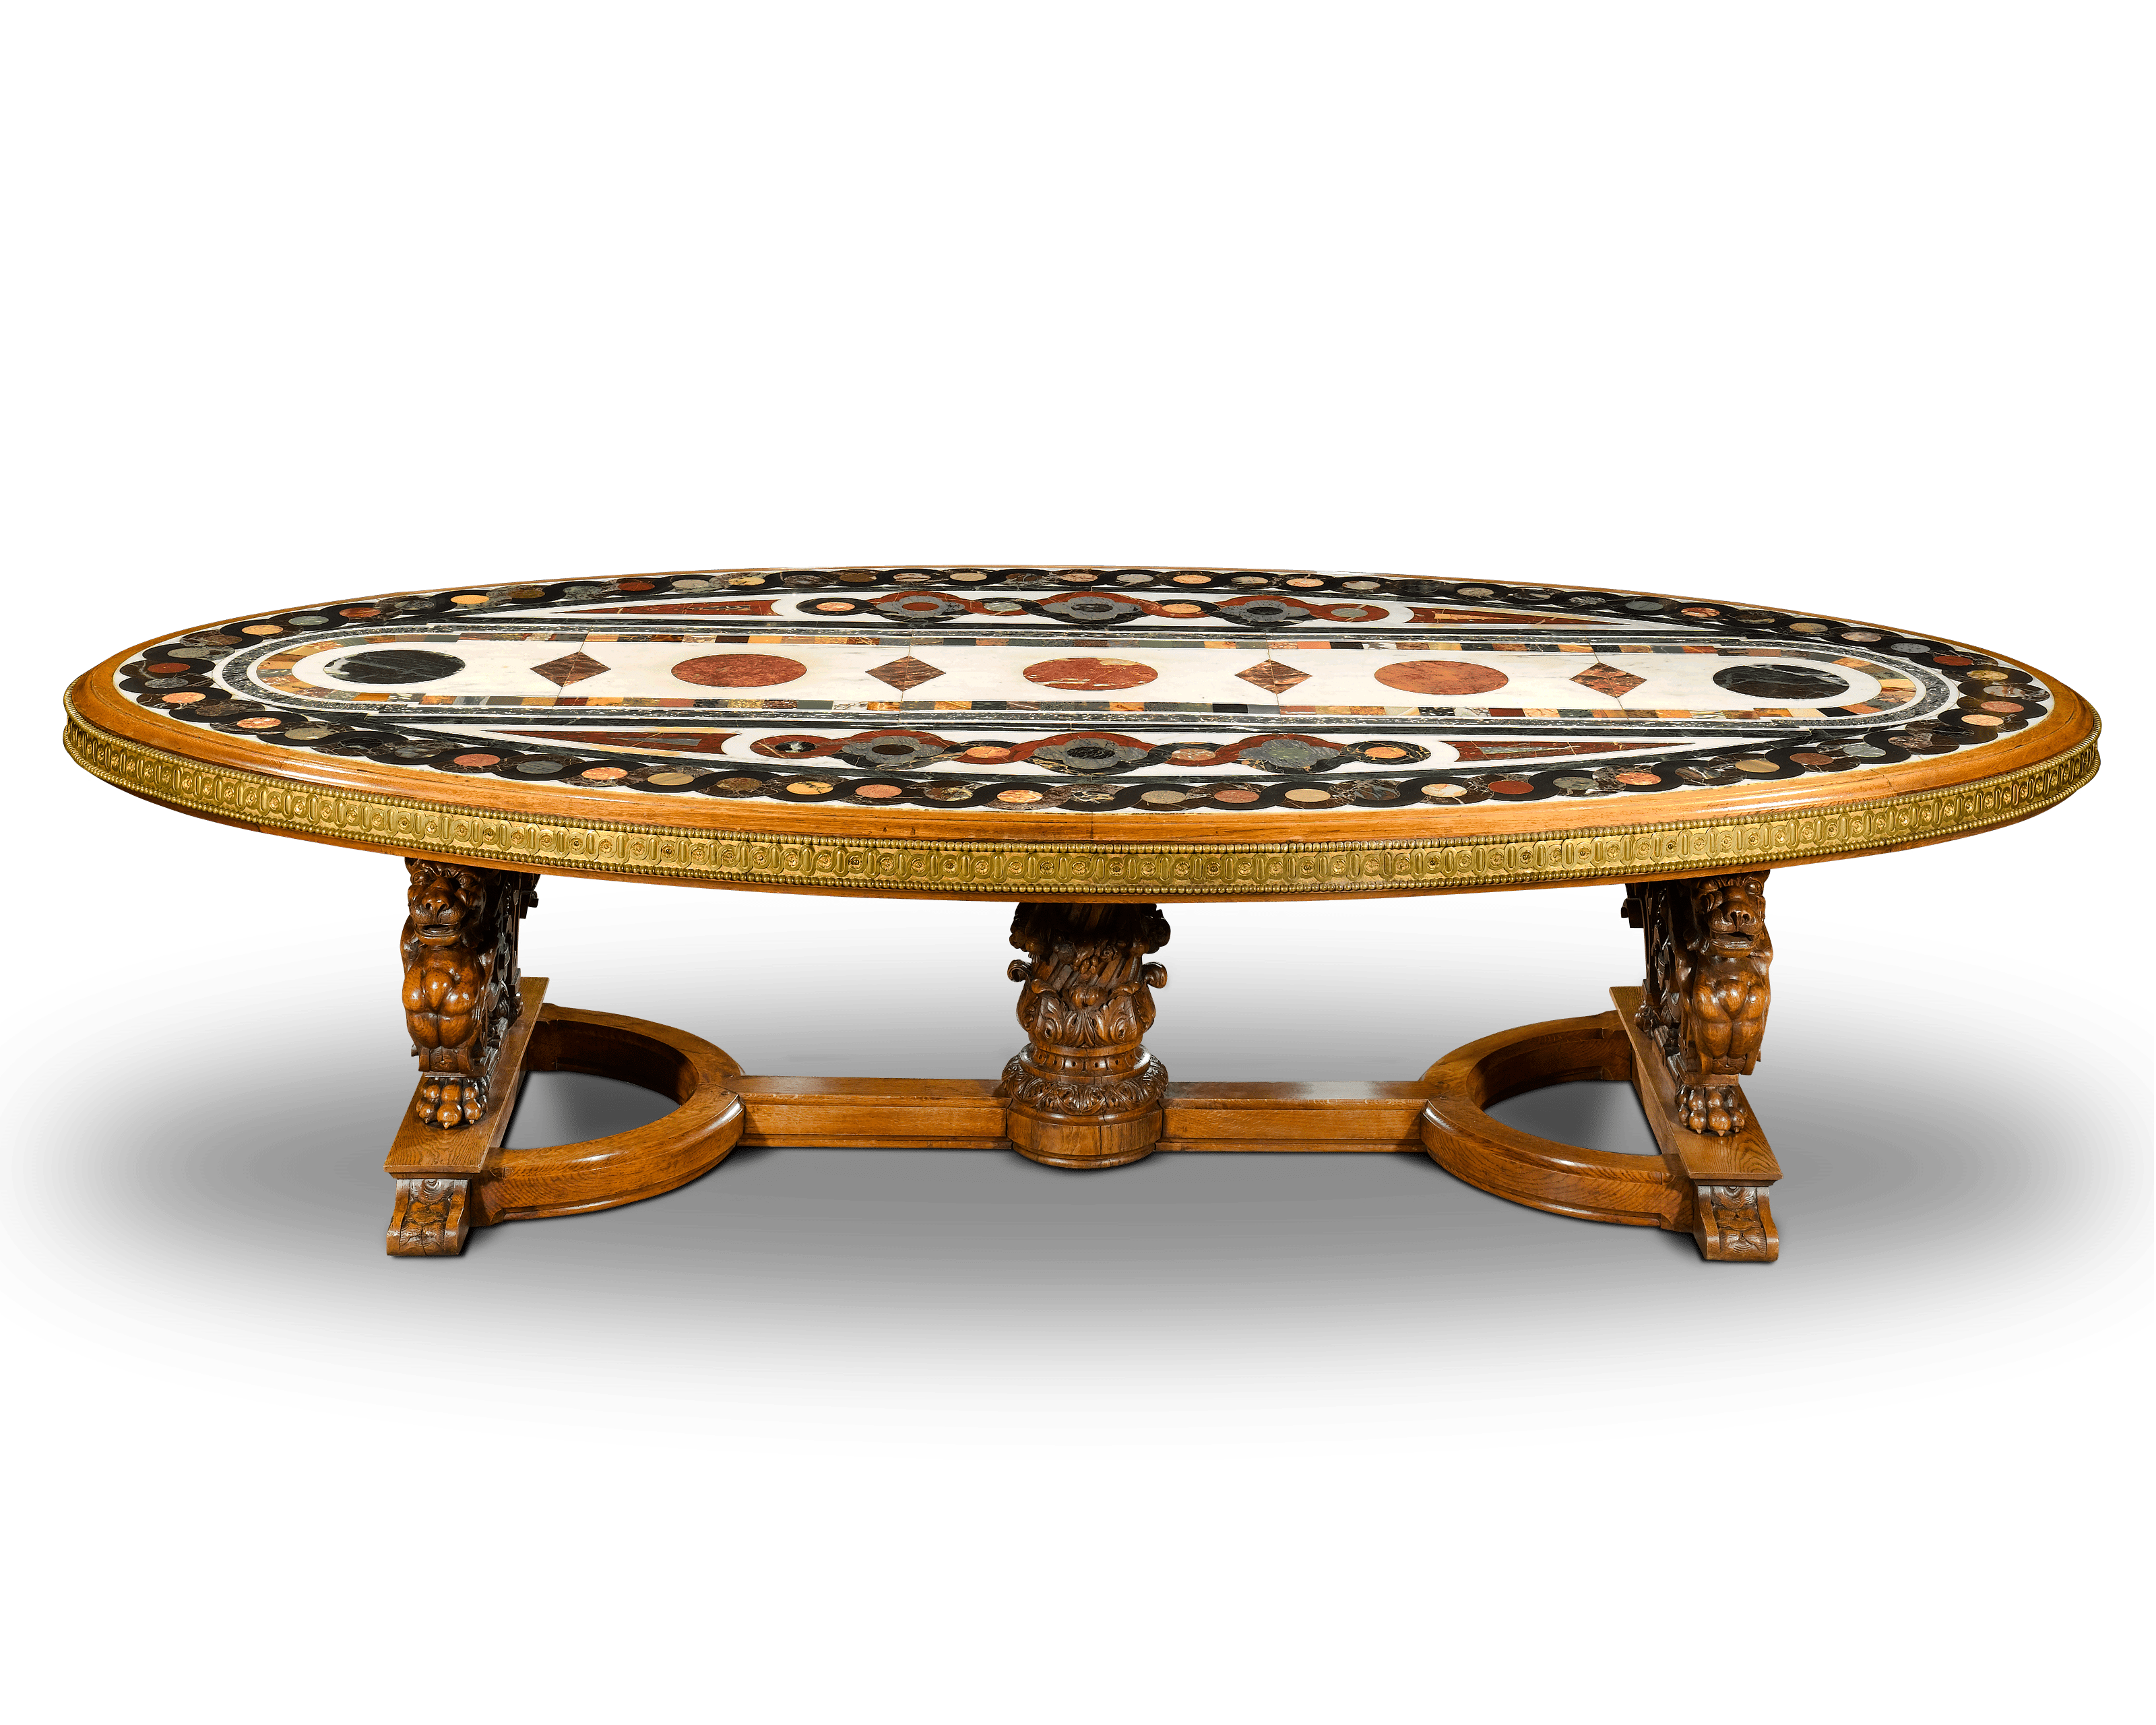 The Manheim Marble Specimen Table